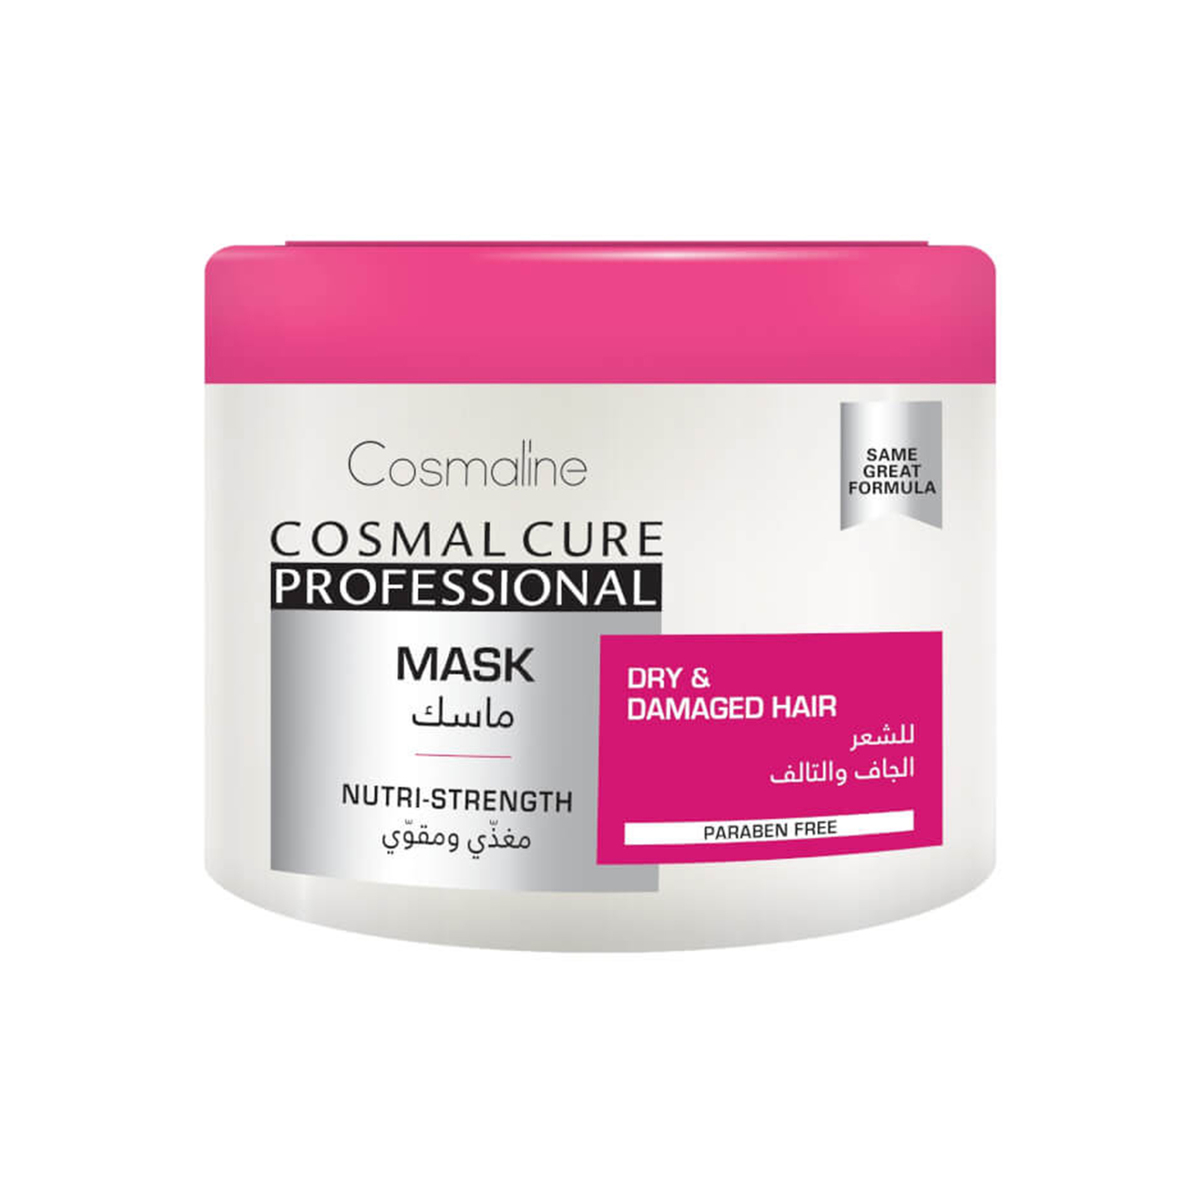 Cosmaline Cosmal Cure Professional Nutri-Strength Mask 450ml